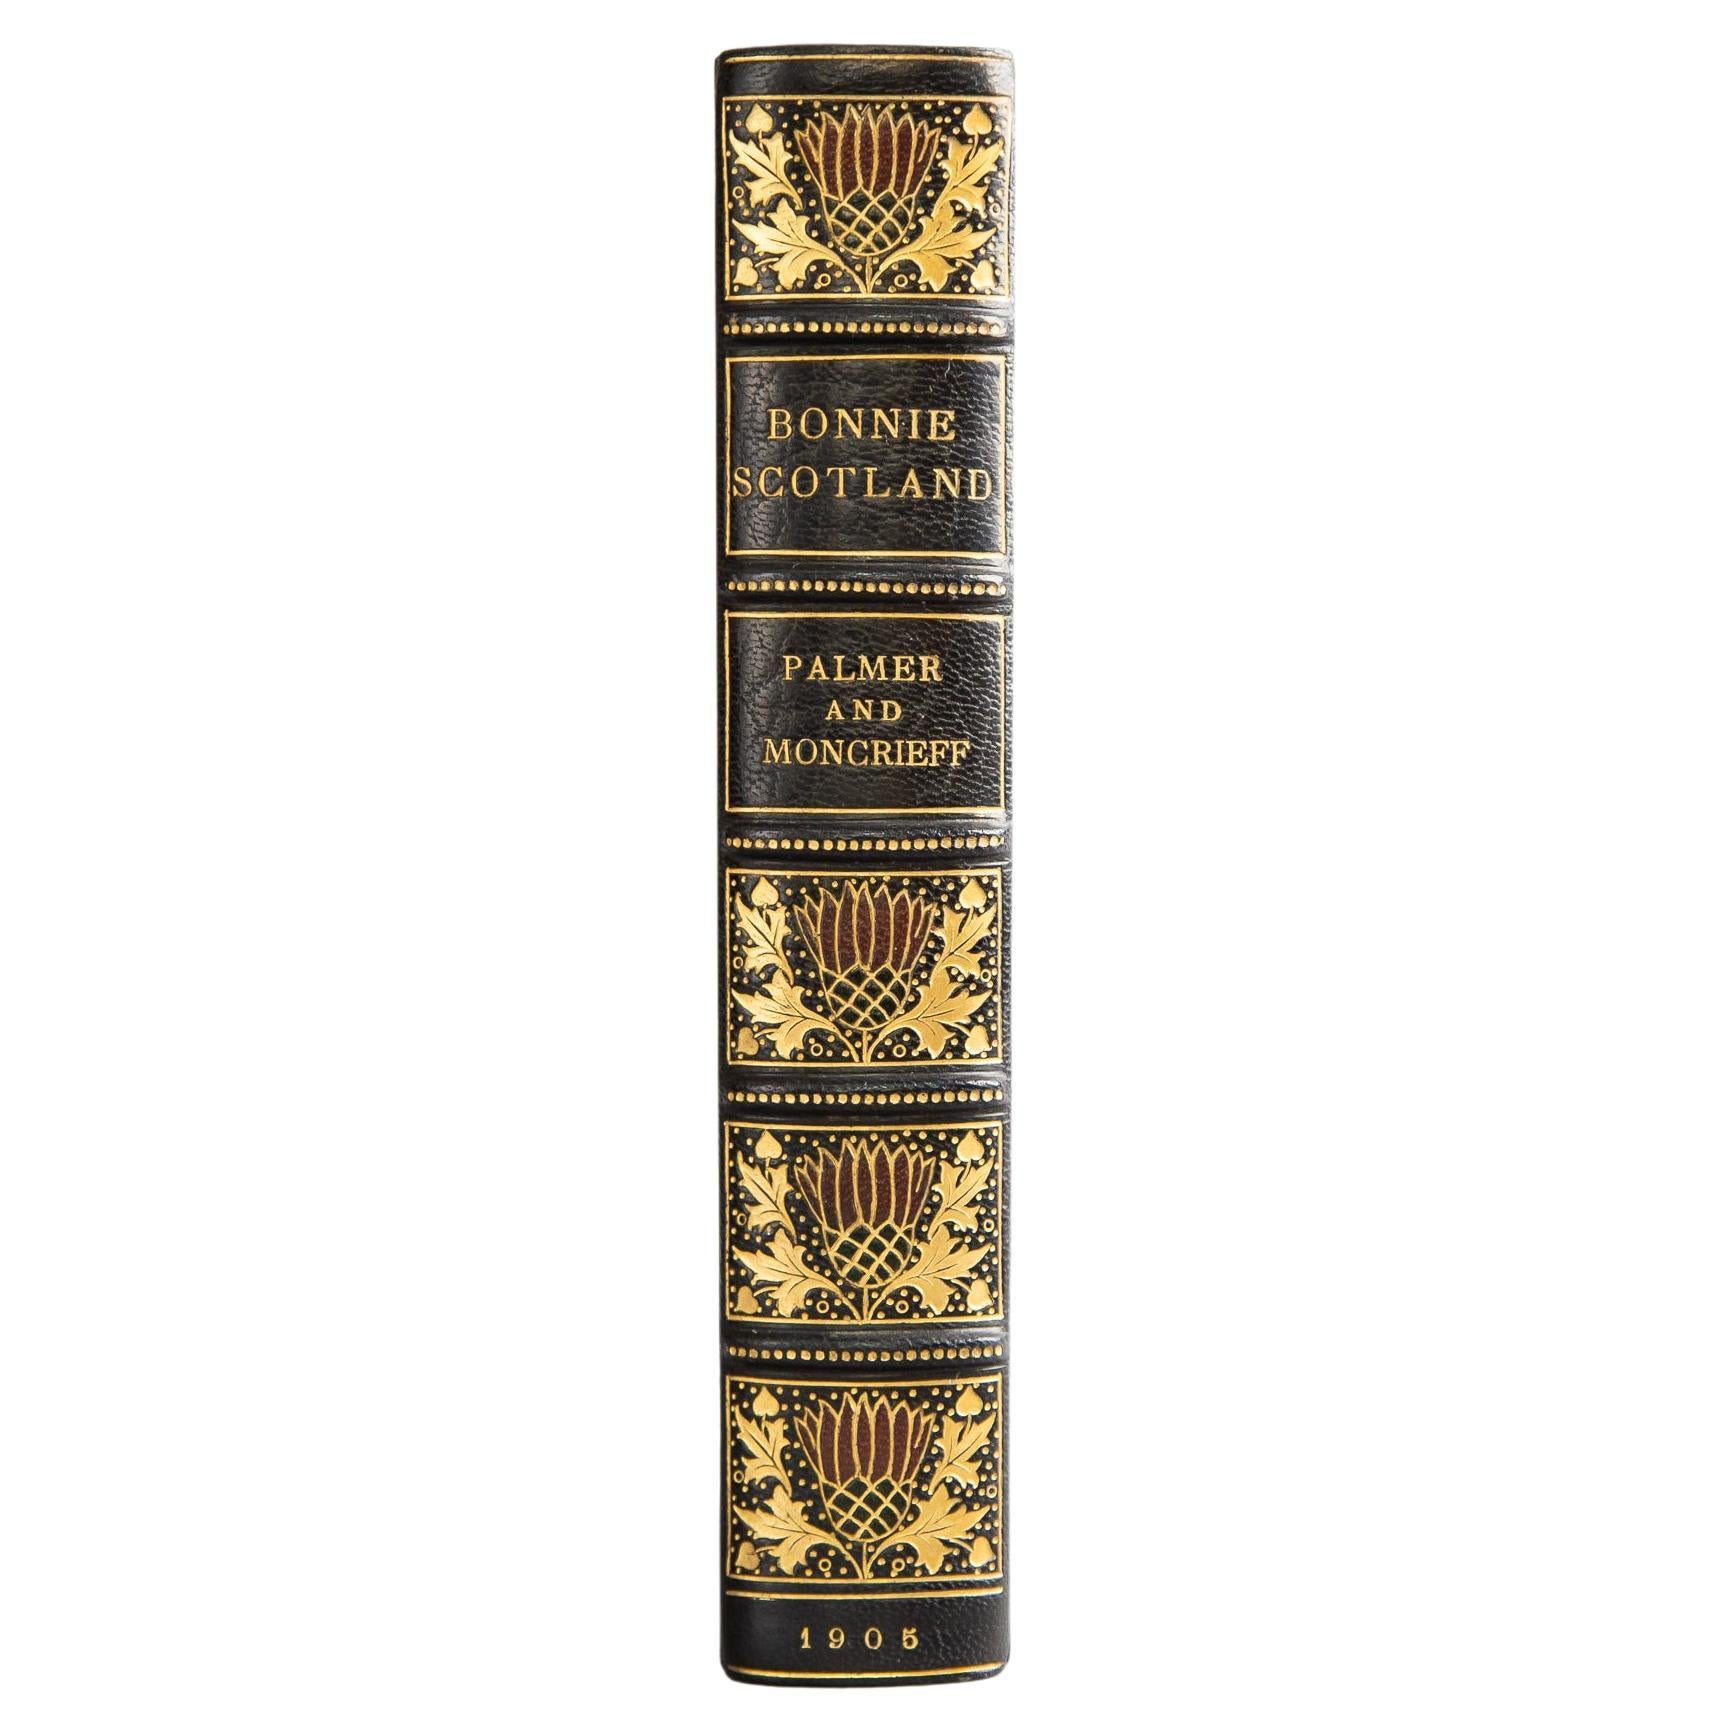 1 Volume. A.R. Hope Moncrieff, Bonnie Scotland For Sale